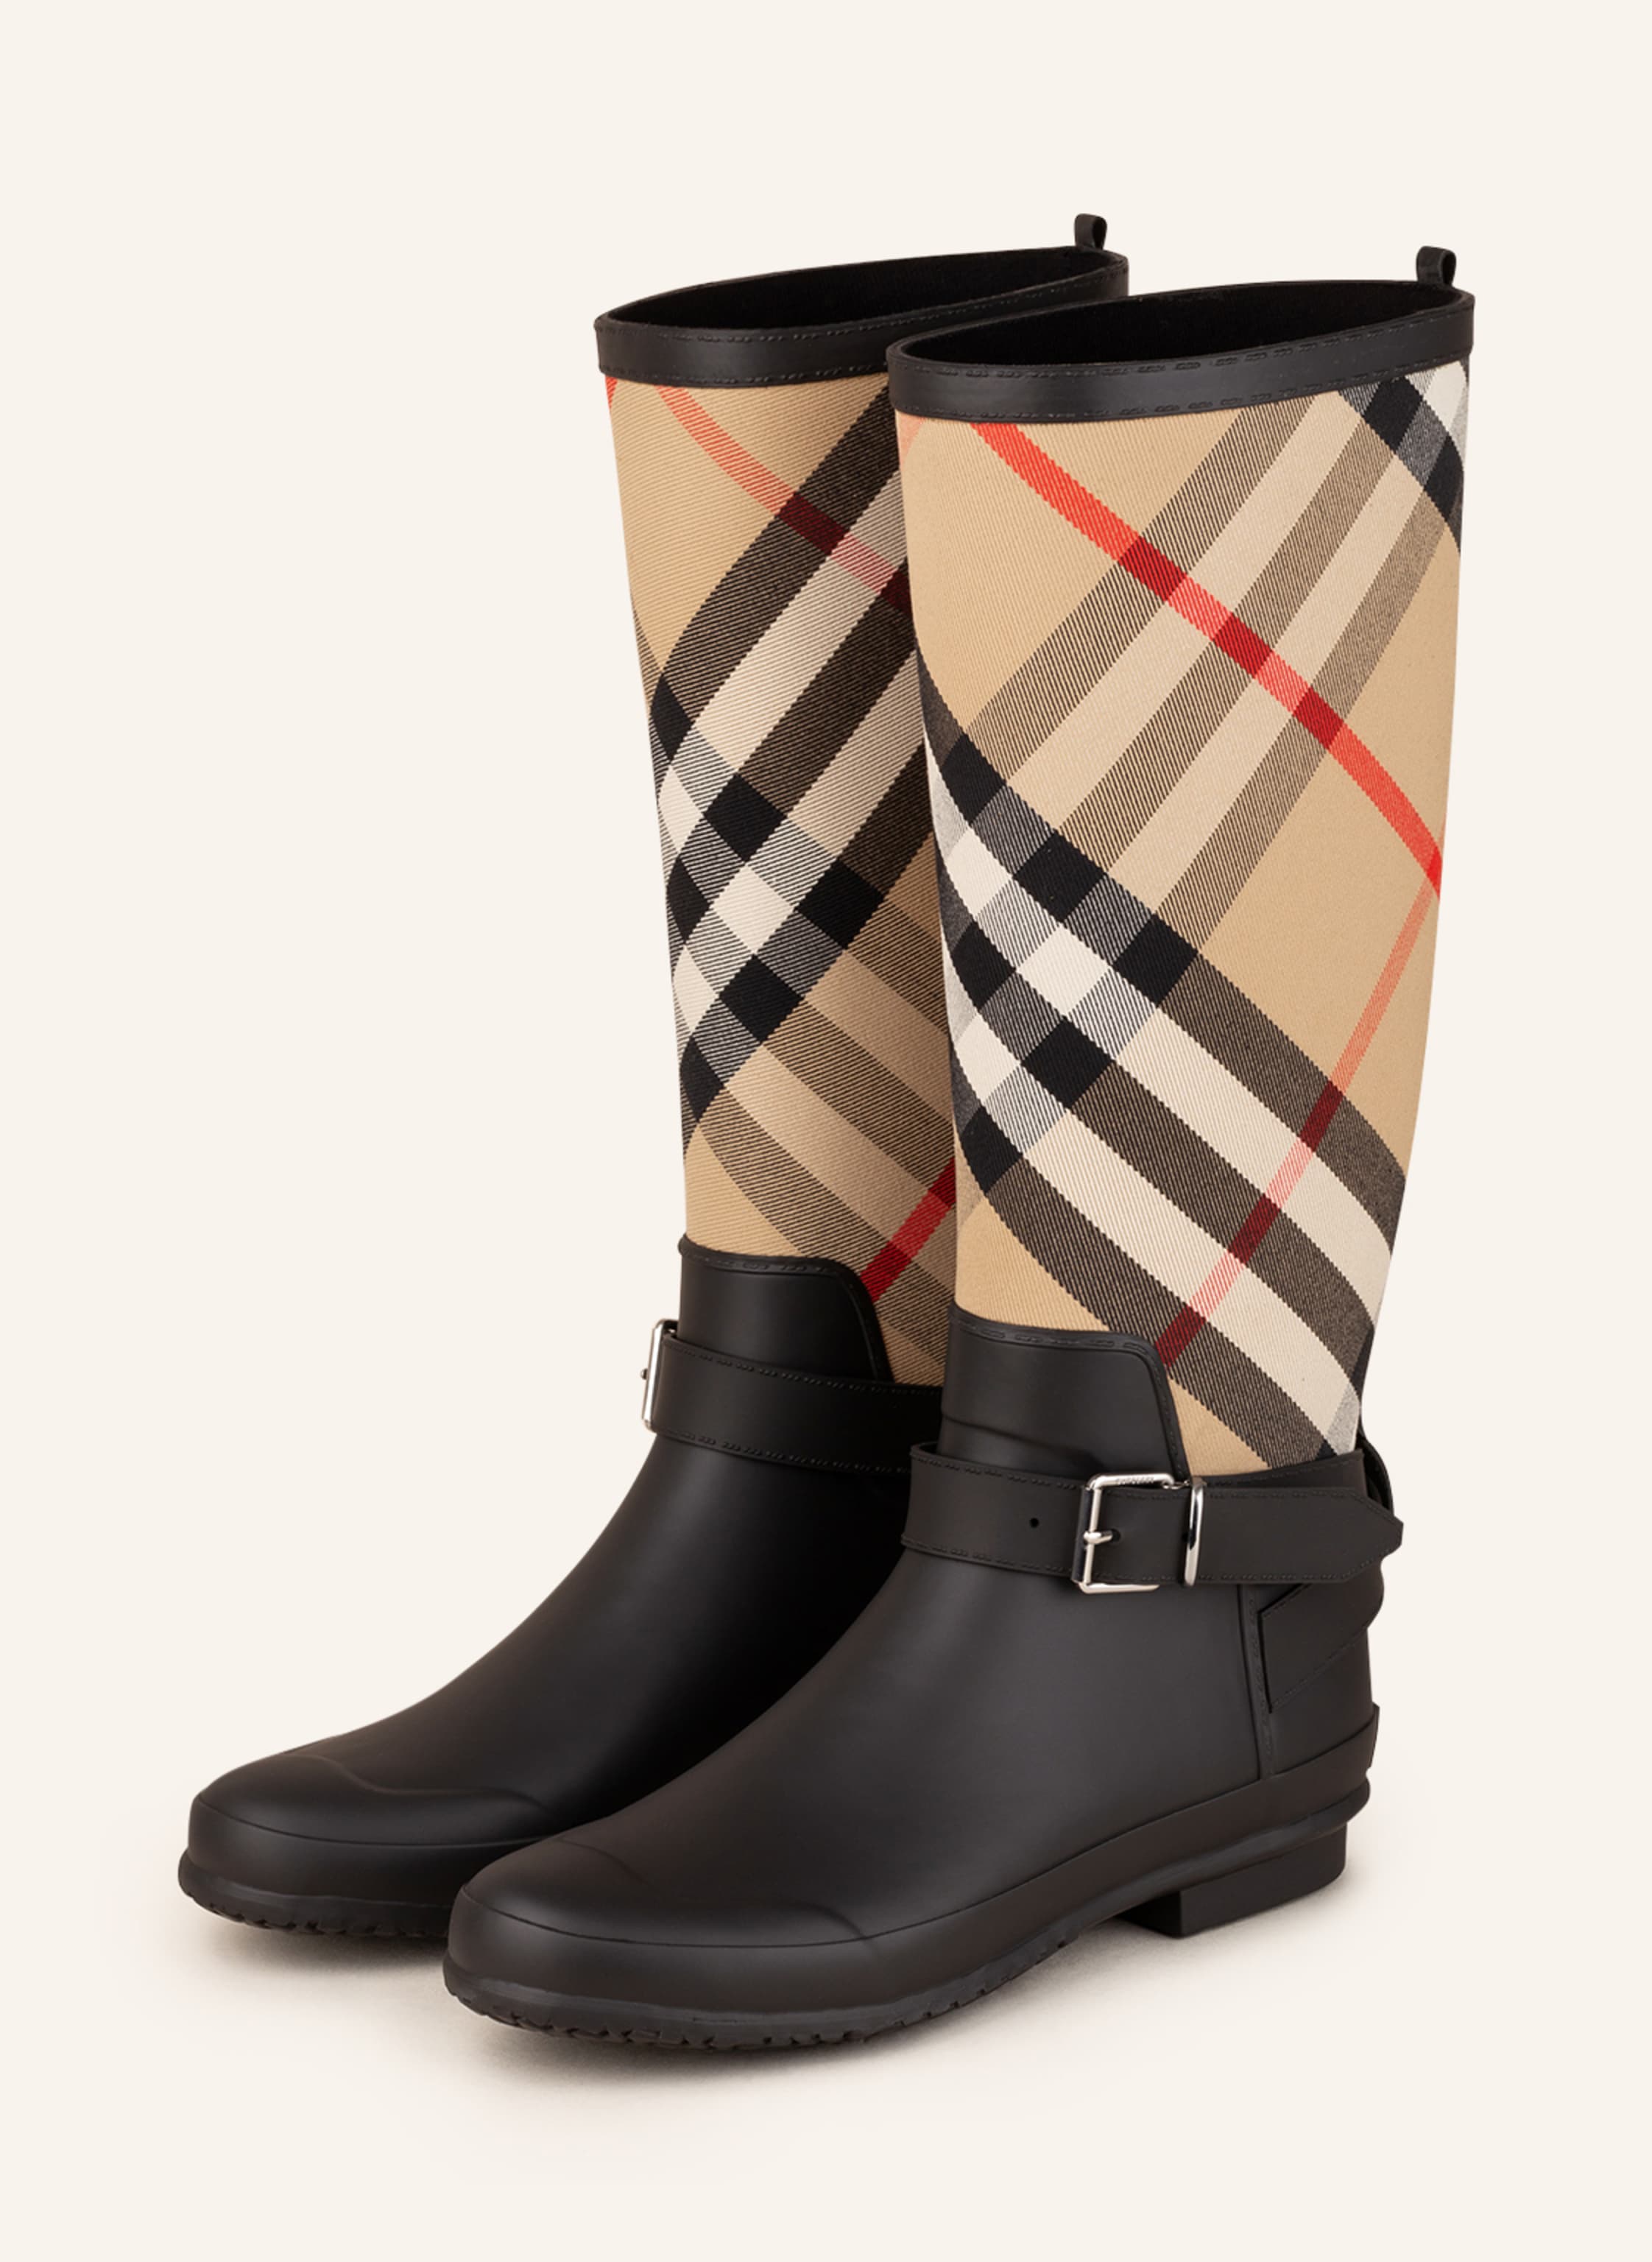 BURBERRY Rain boots SIMEON in black/ beige/ red | Breuninger